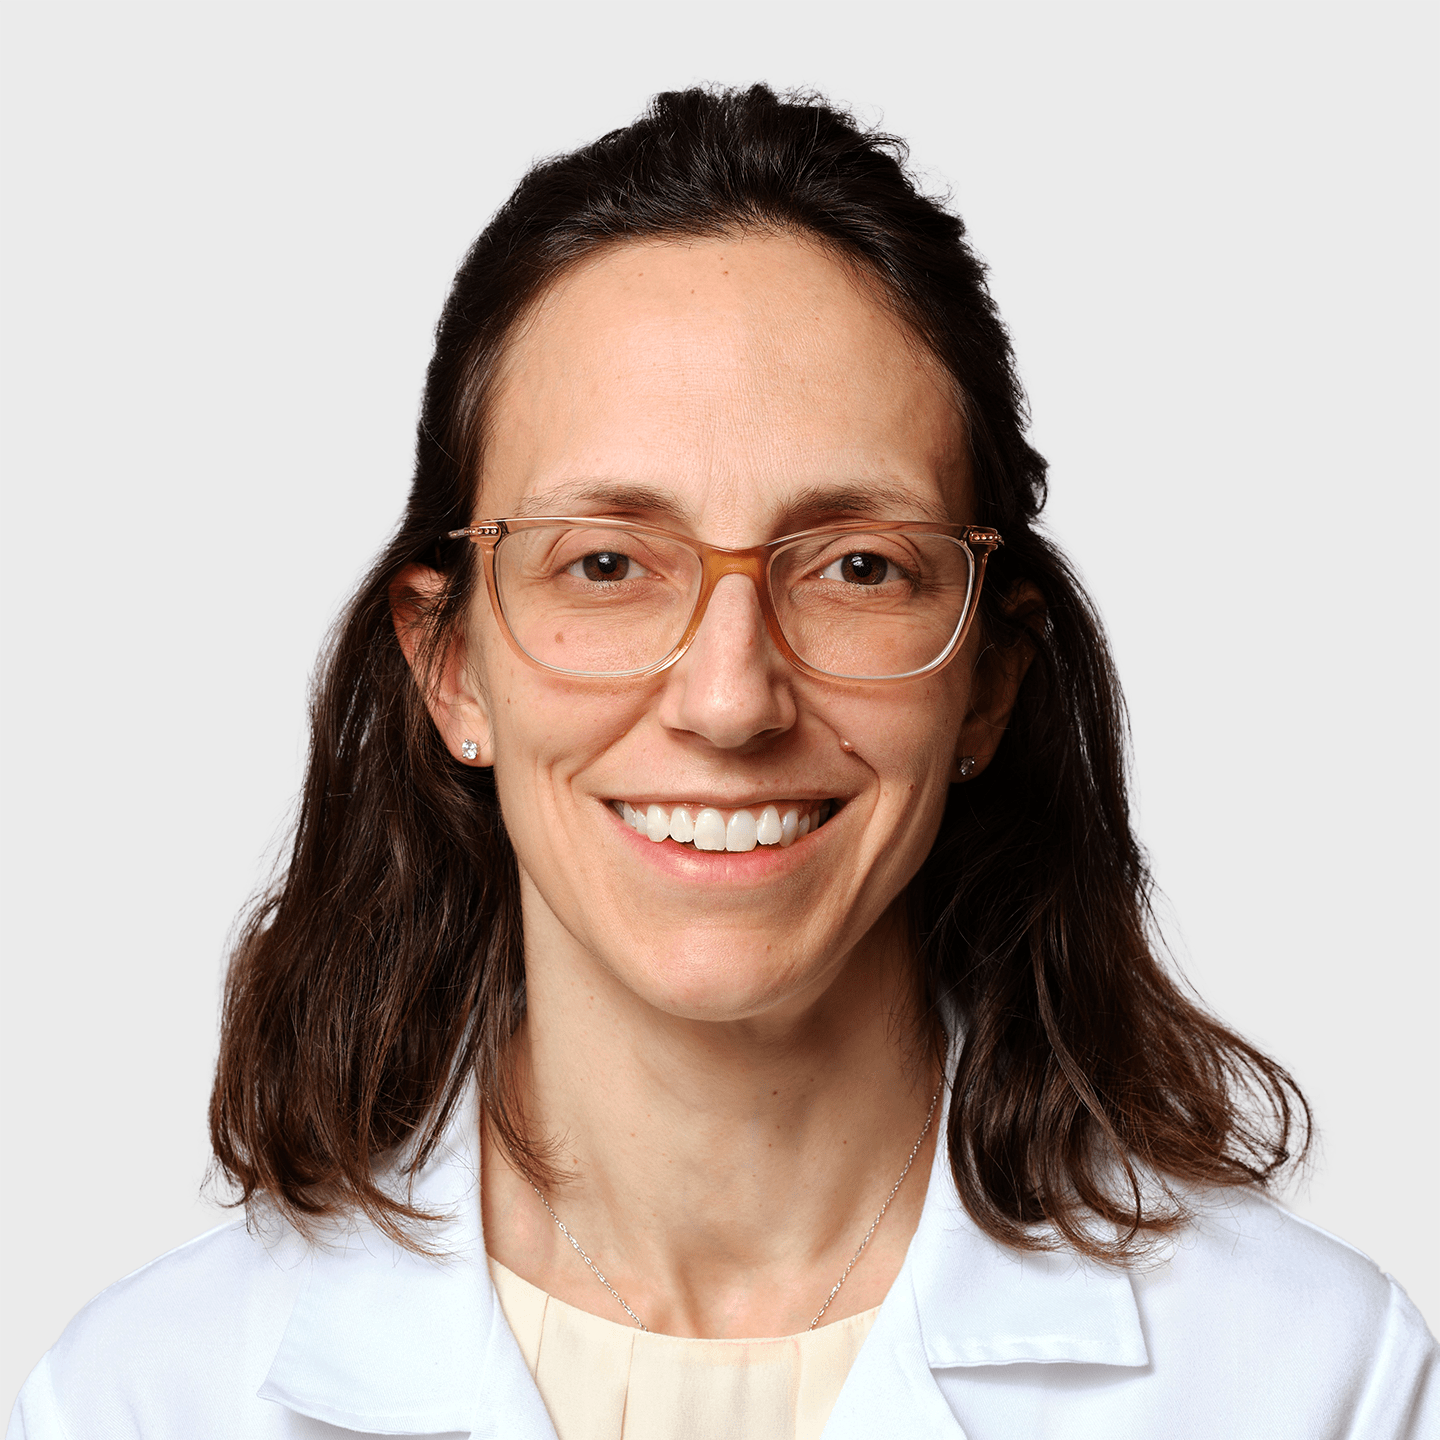 Physician Spotlight on Dr. Elisabeth Gennis